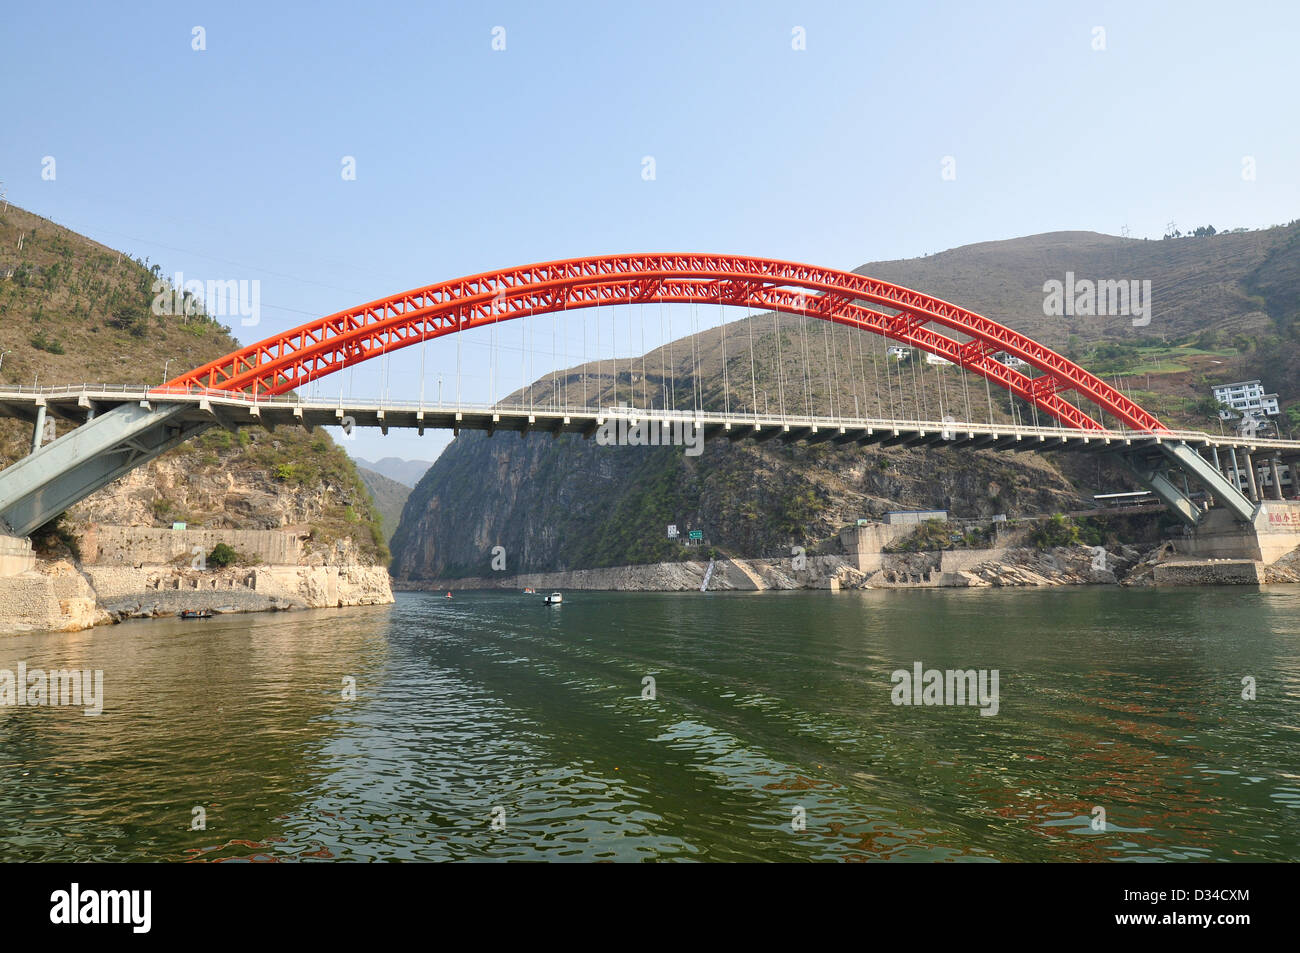 New Dragon Gate Bridge - Wushan, China Stock Photo